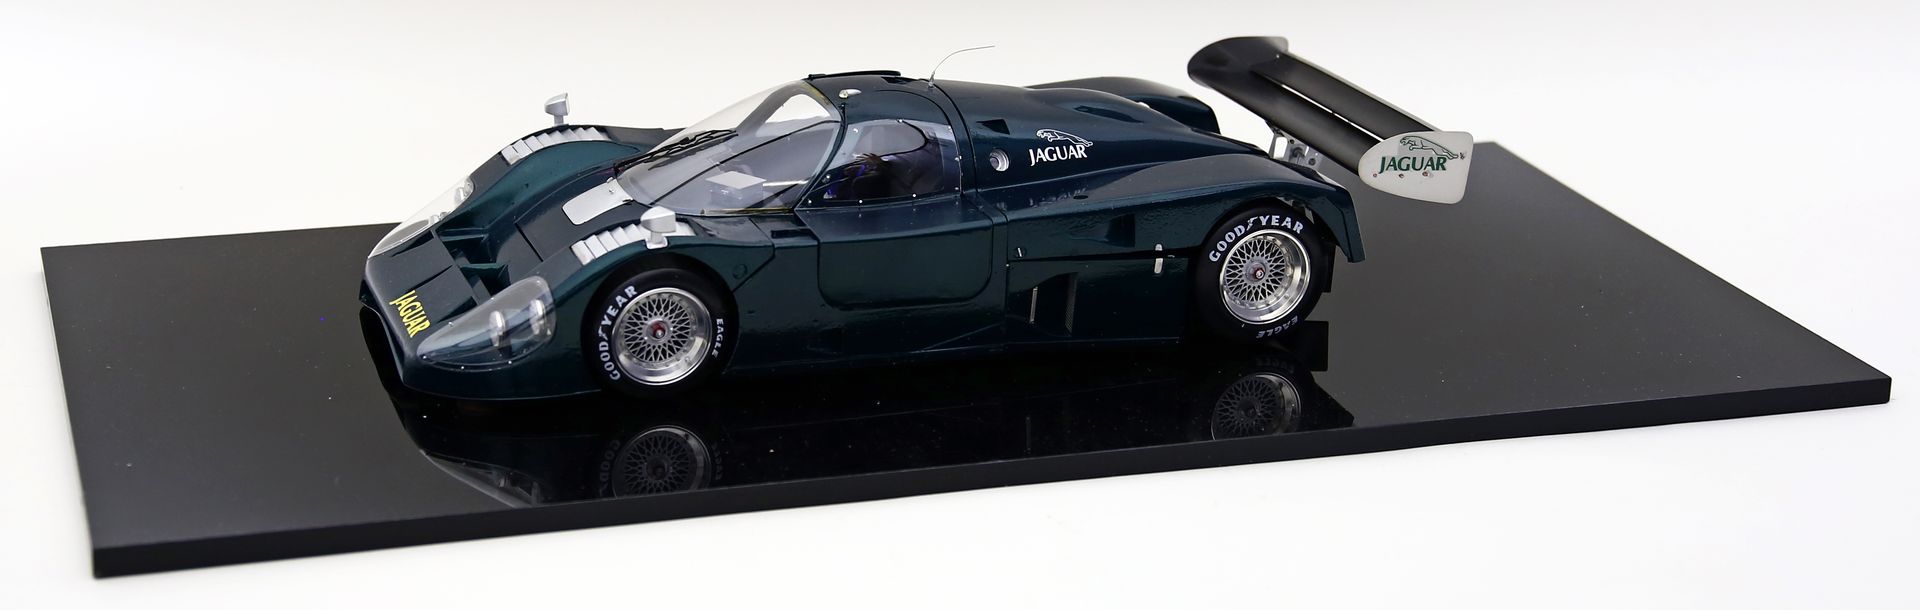 Modellauto "Sportwagen Jaguar", 1:12.